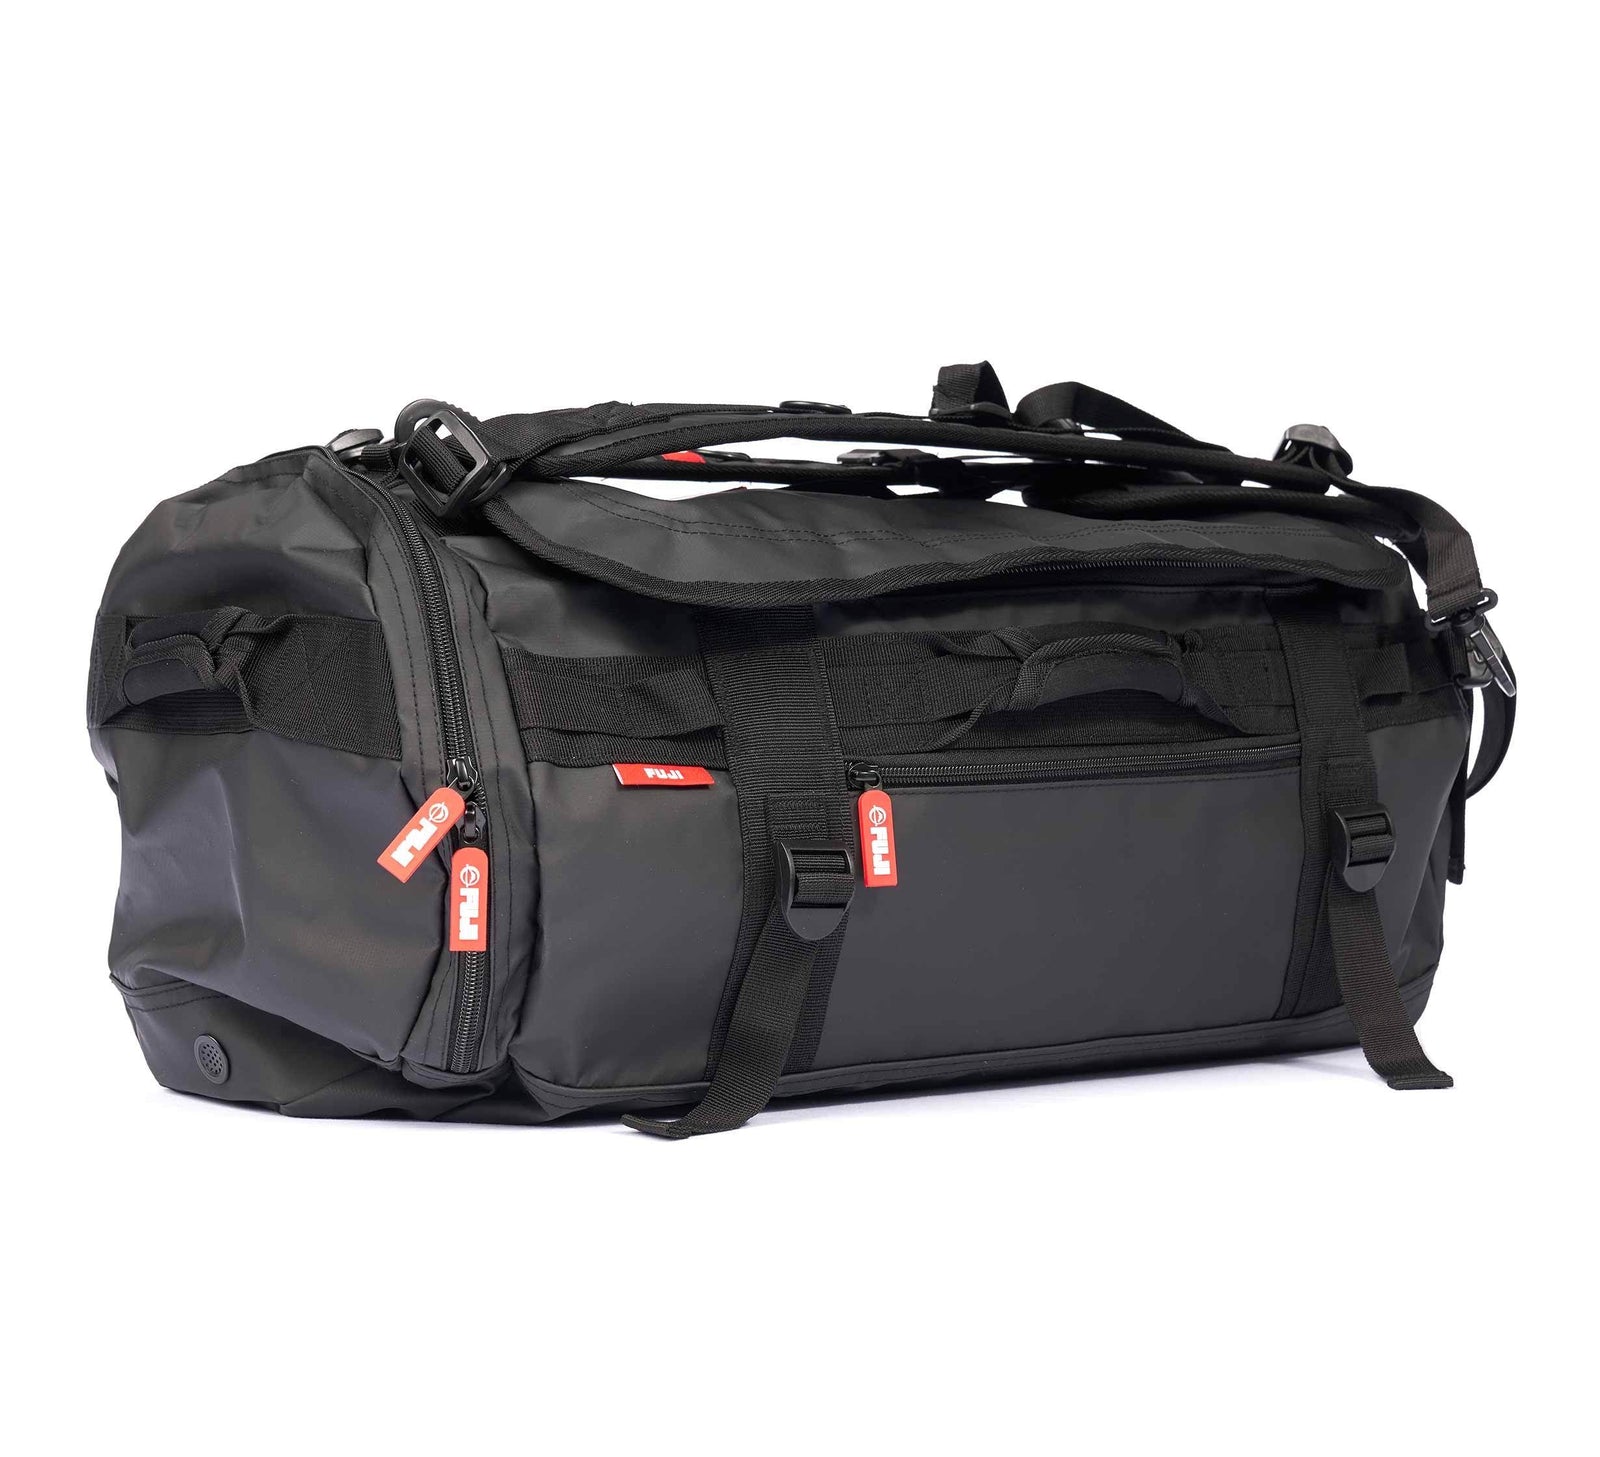 Comp Convertible Backpack Duffle Black